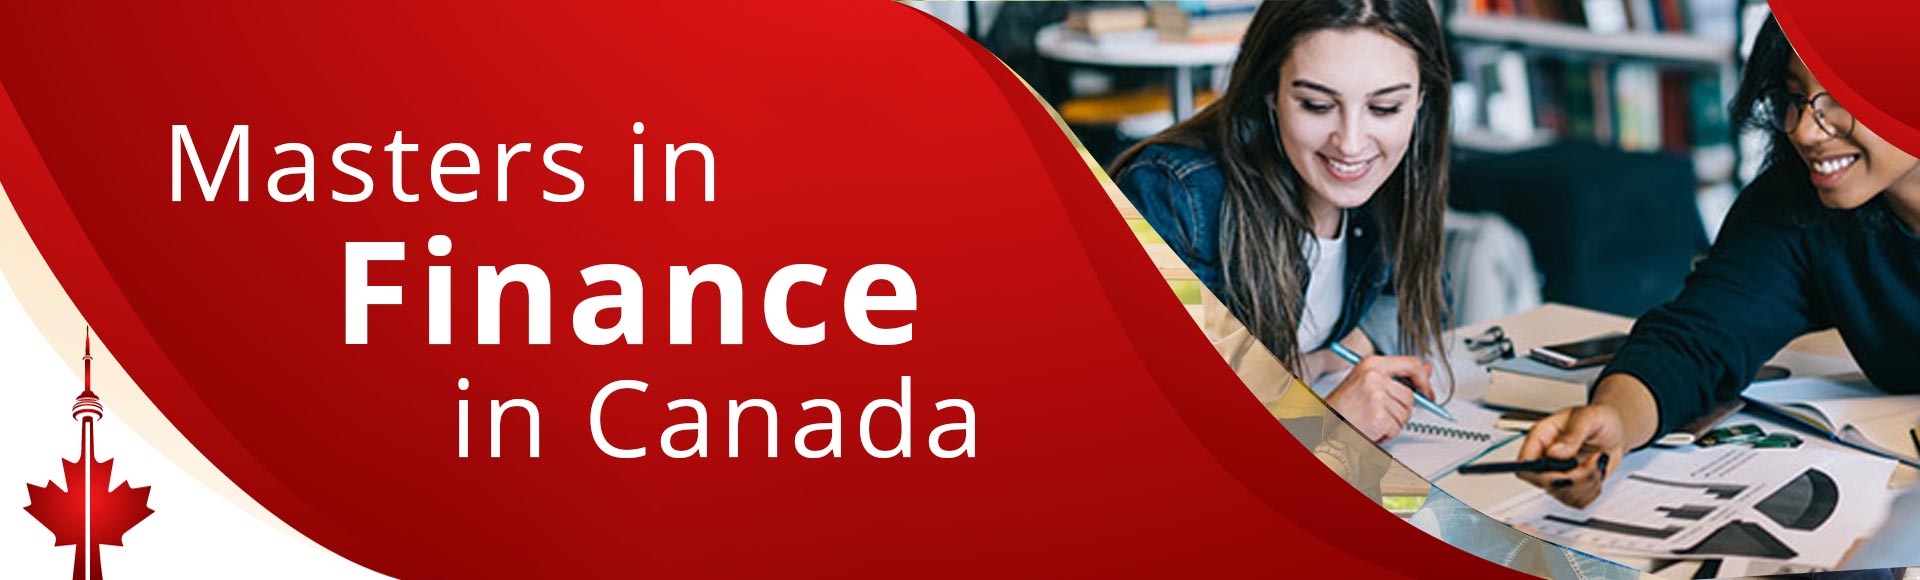 Masters in Finance in Canada - Top Universities, Career options